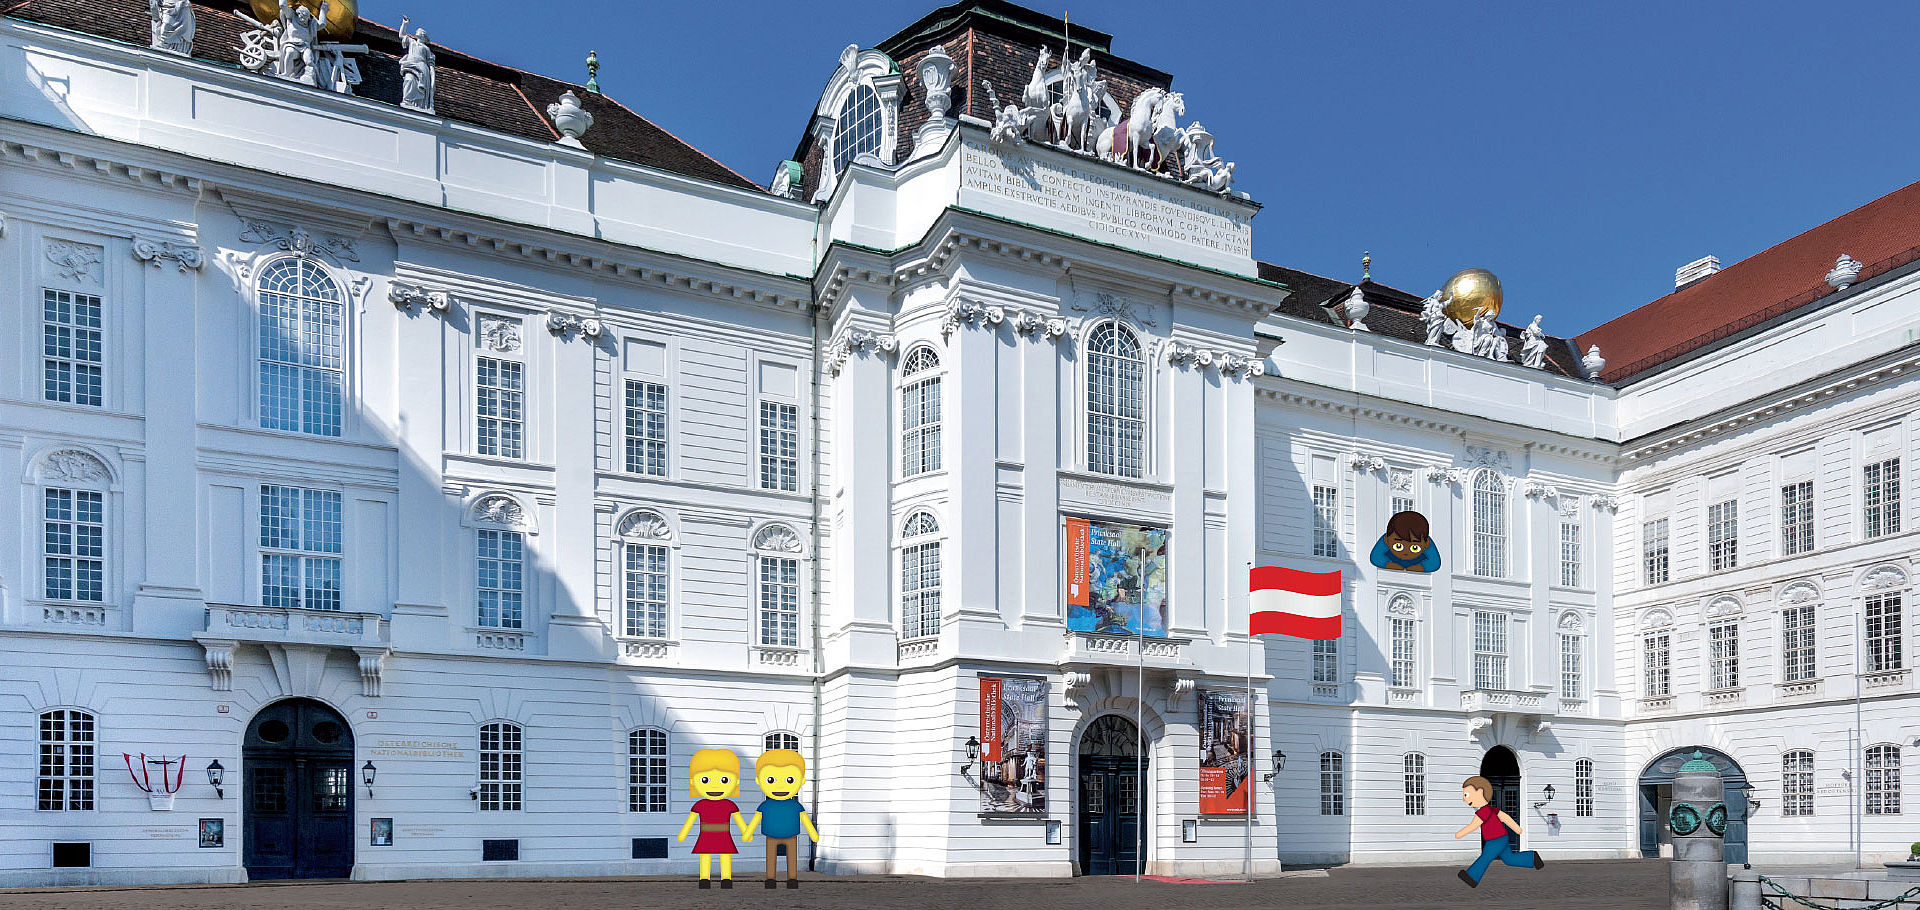 ÖNB-Fassade Josefsplatz mit Comicfiguren